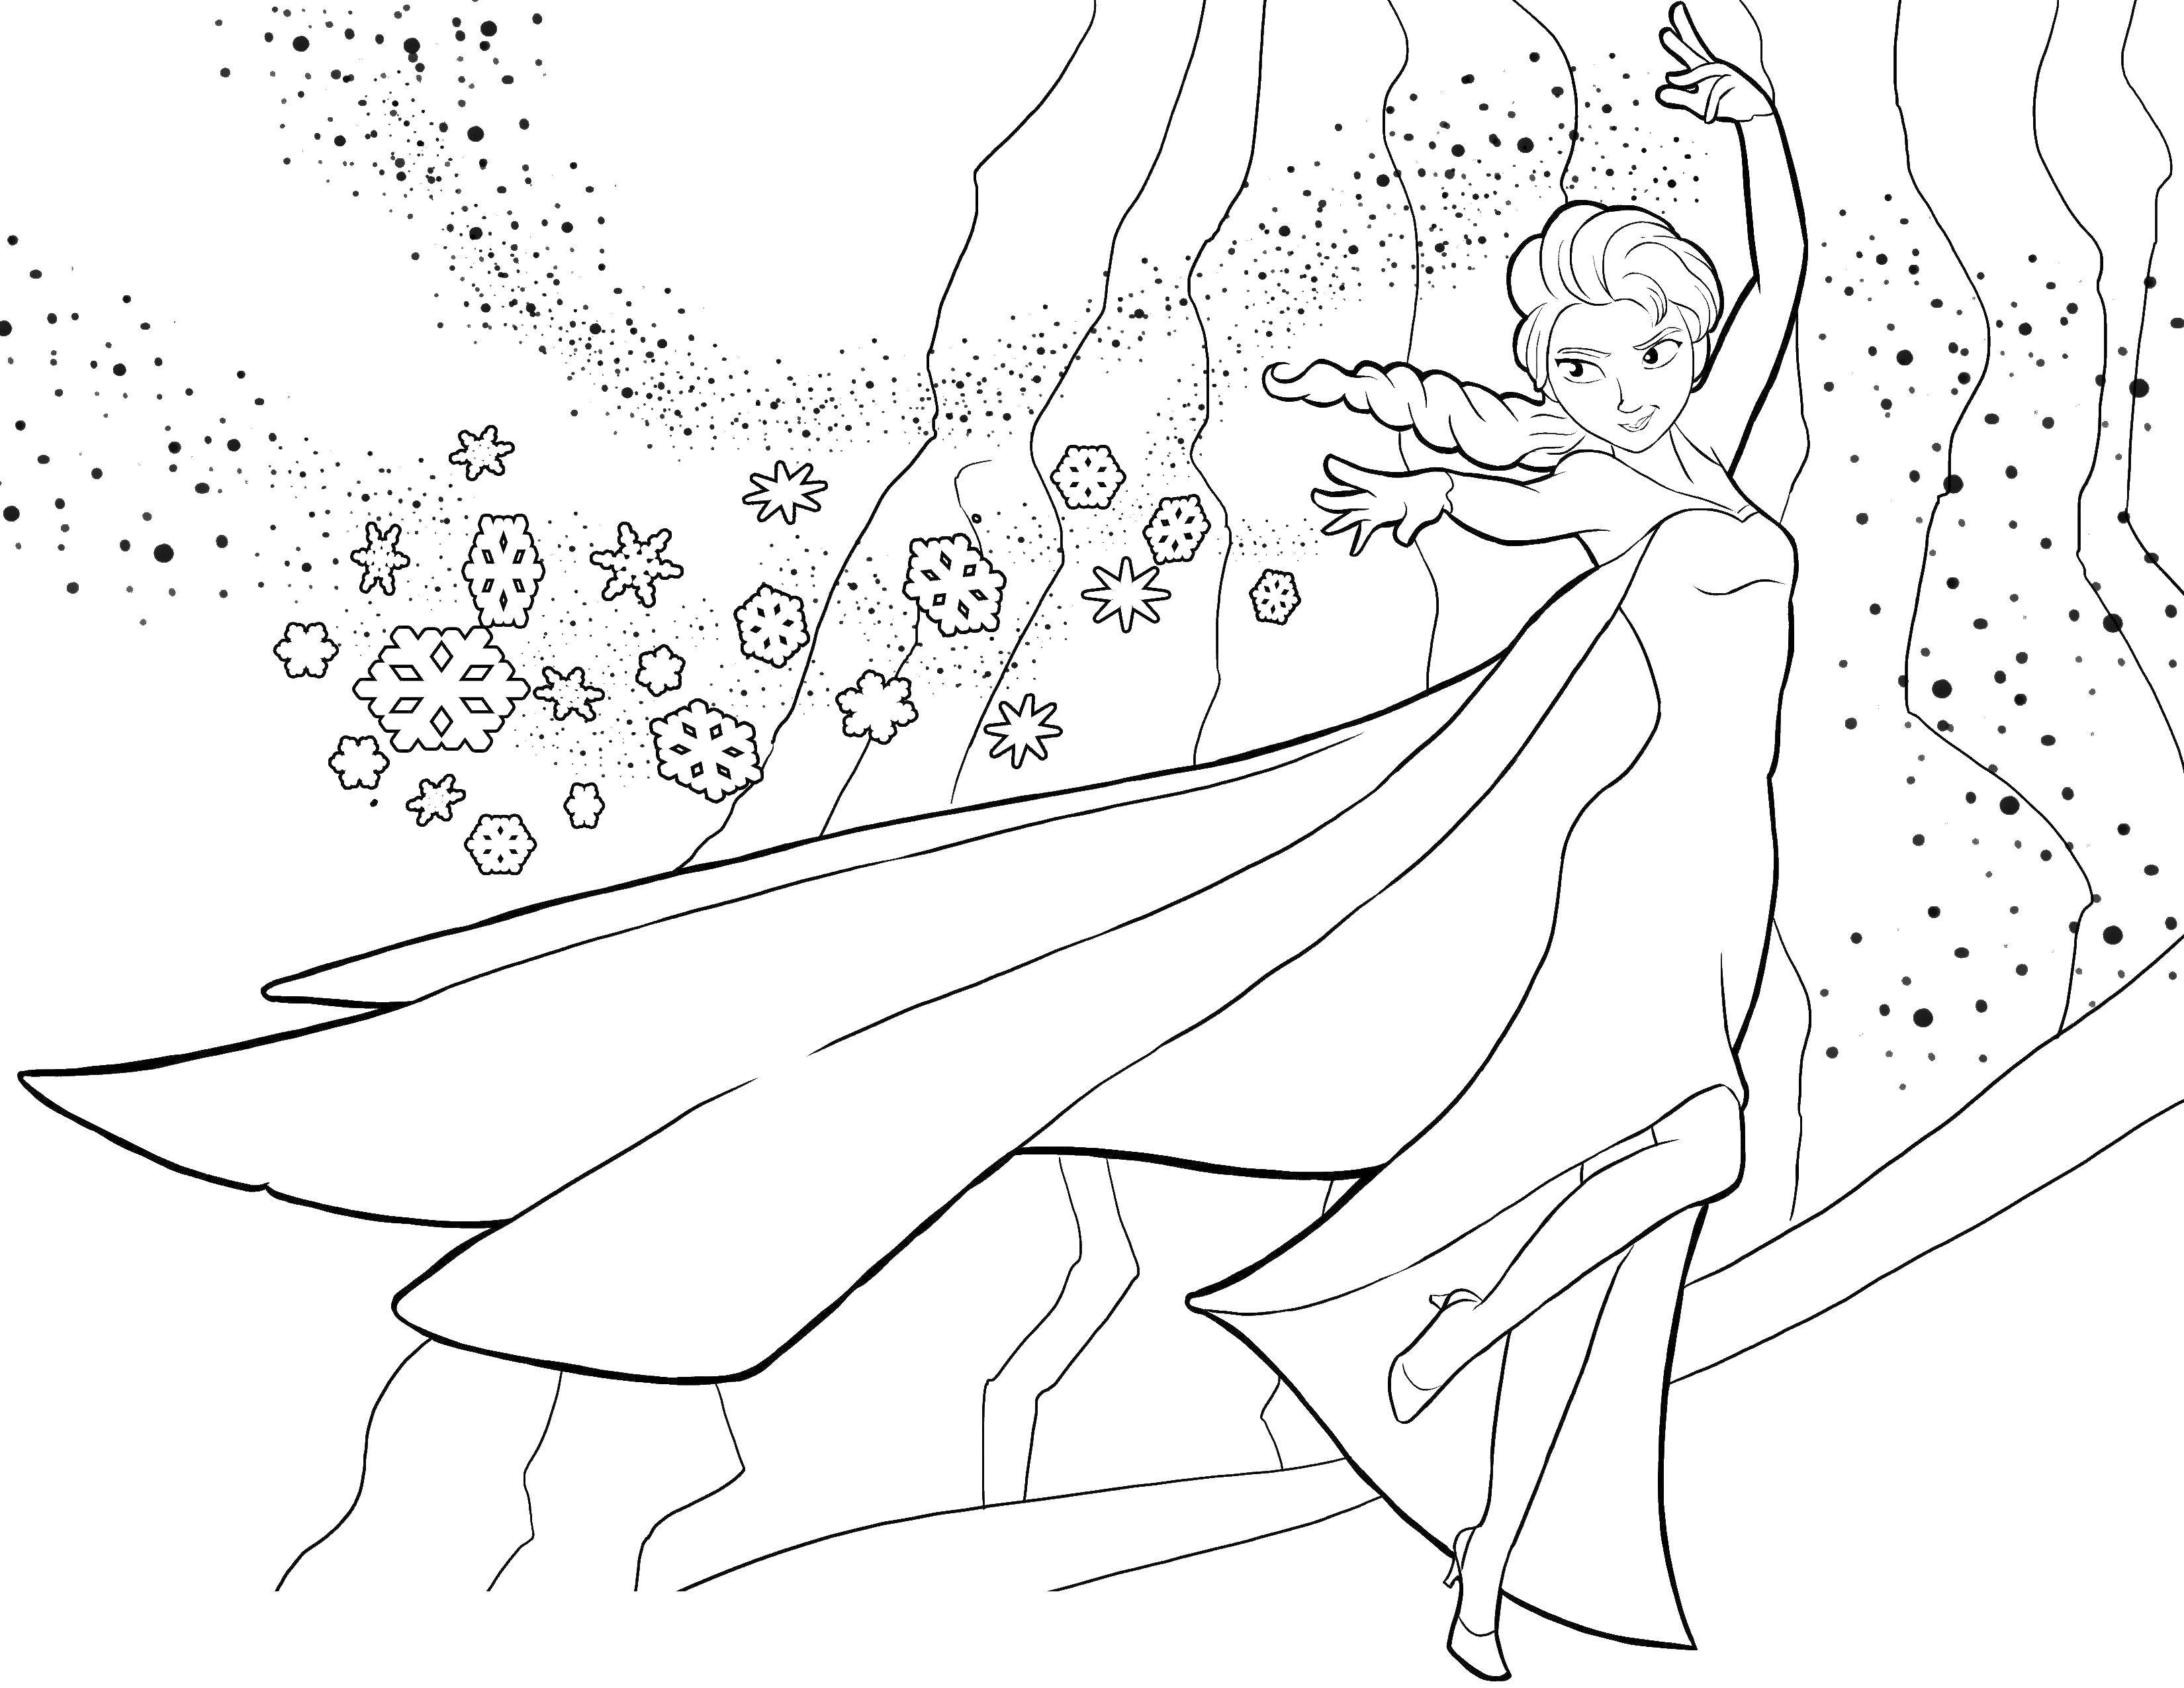 Coloring Elsa. Category Princess. Tags:  Princess , fairytale, Elsa.